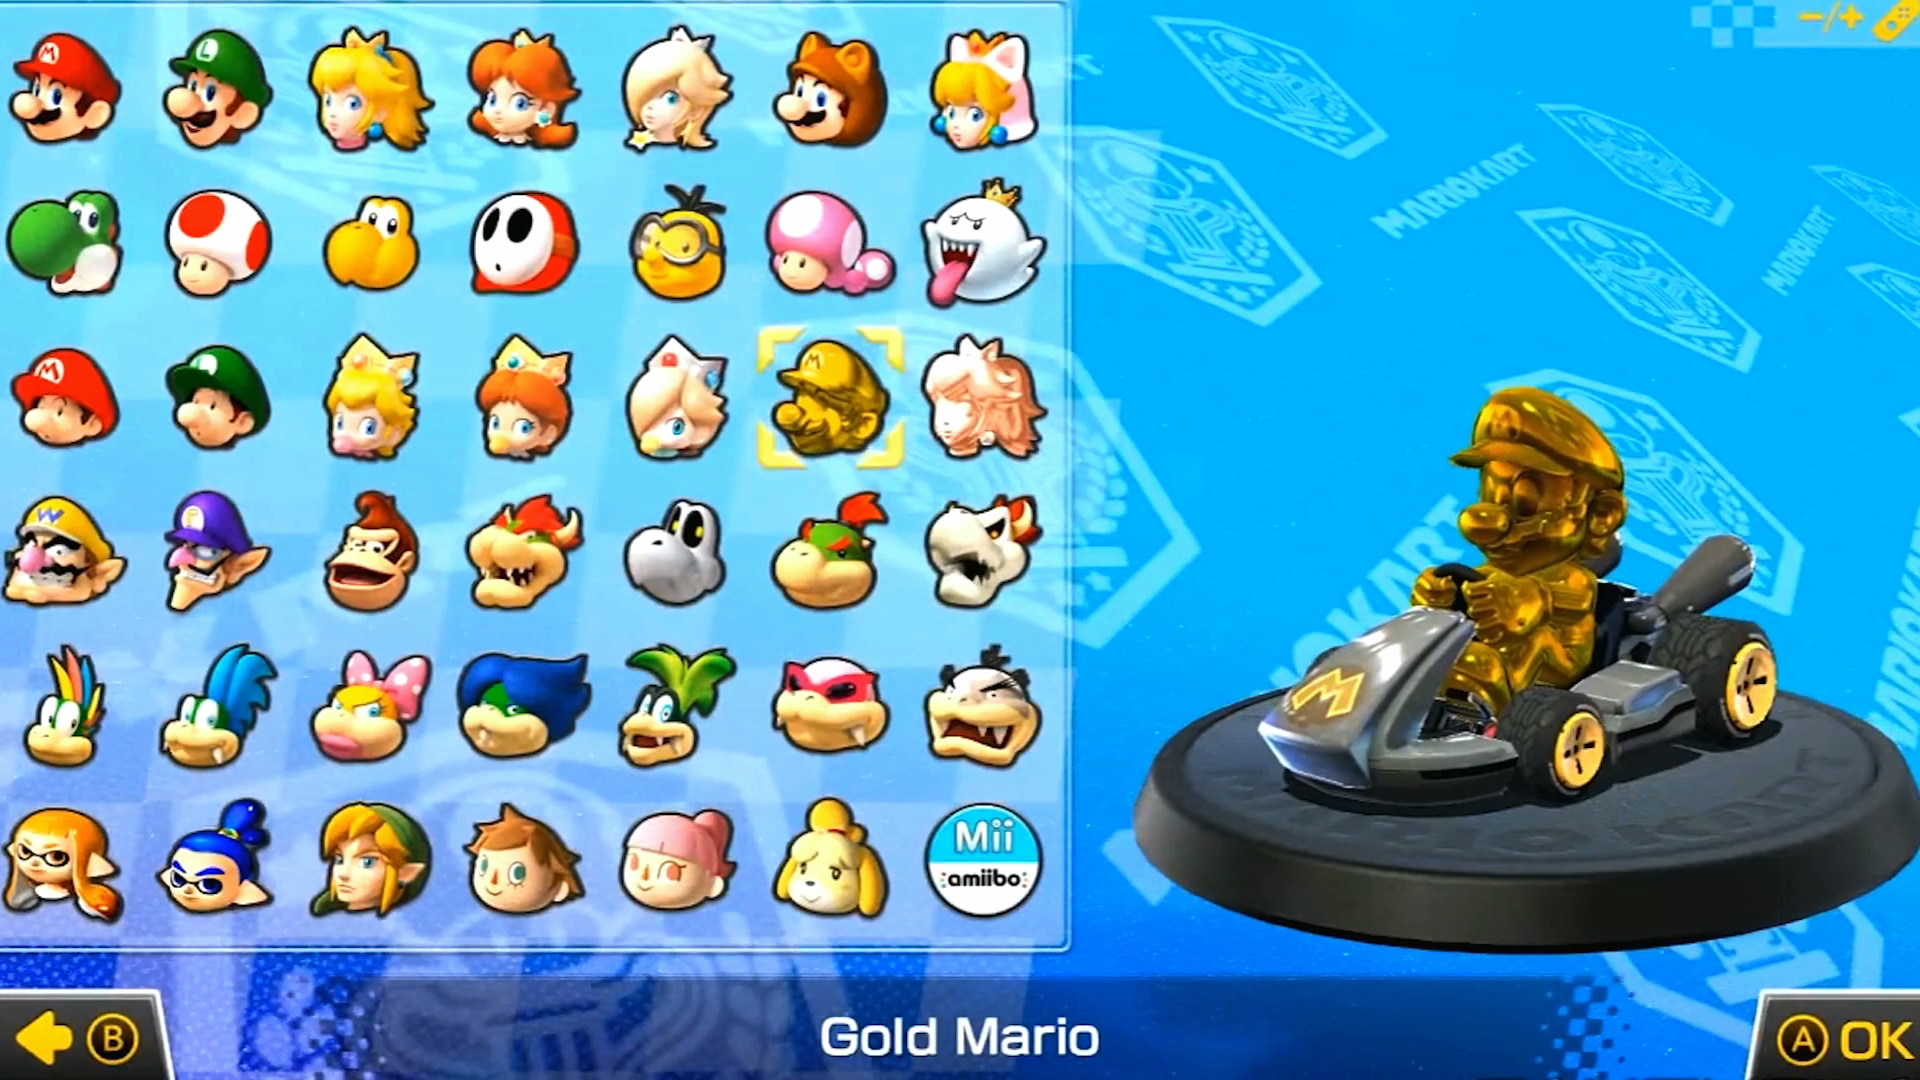 Mario Kart 8 Deluxe unlockables how to get Gold Mario, all the kart